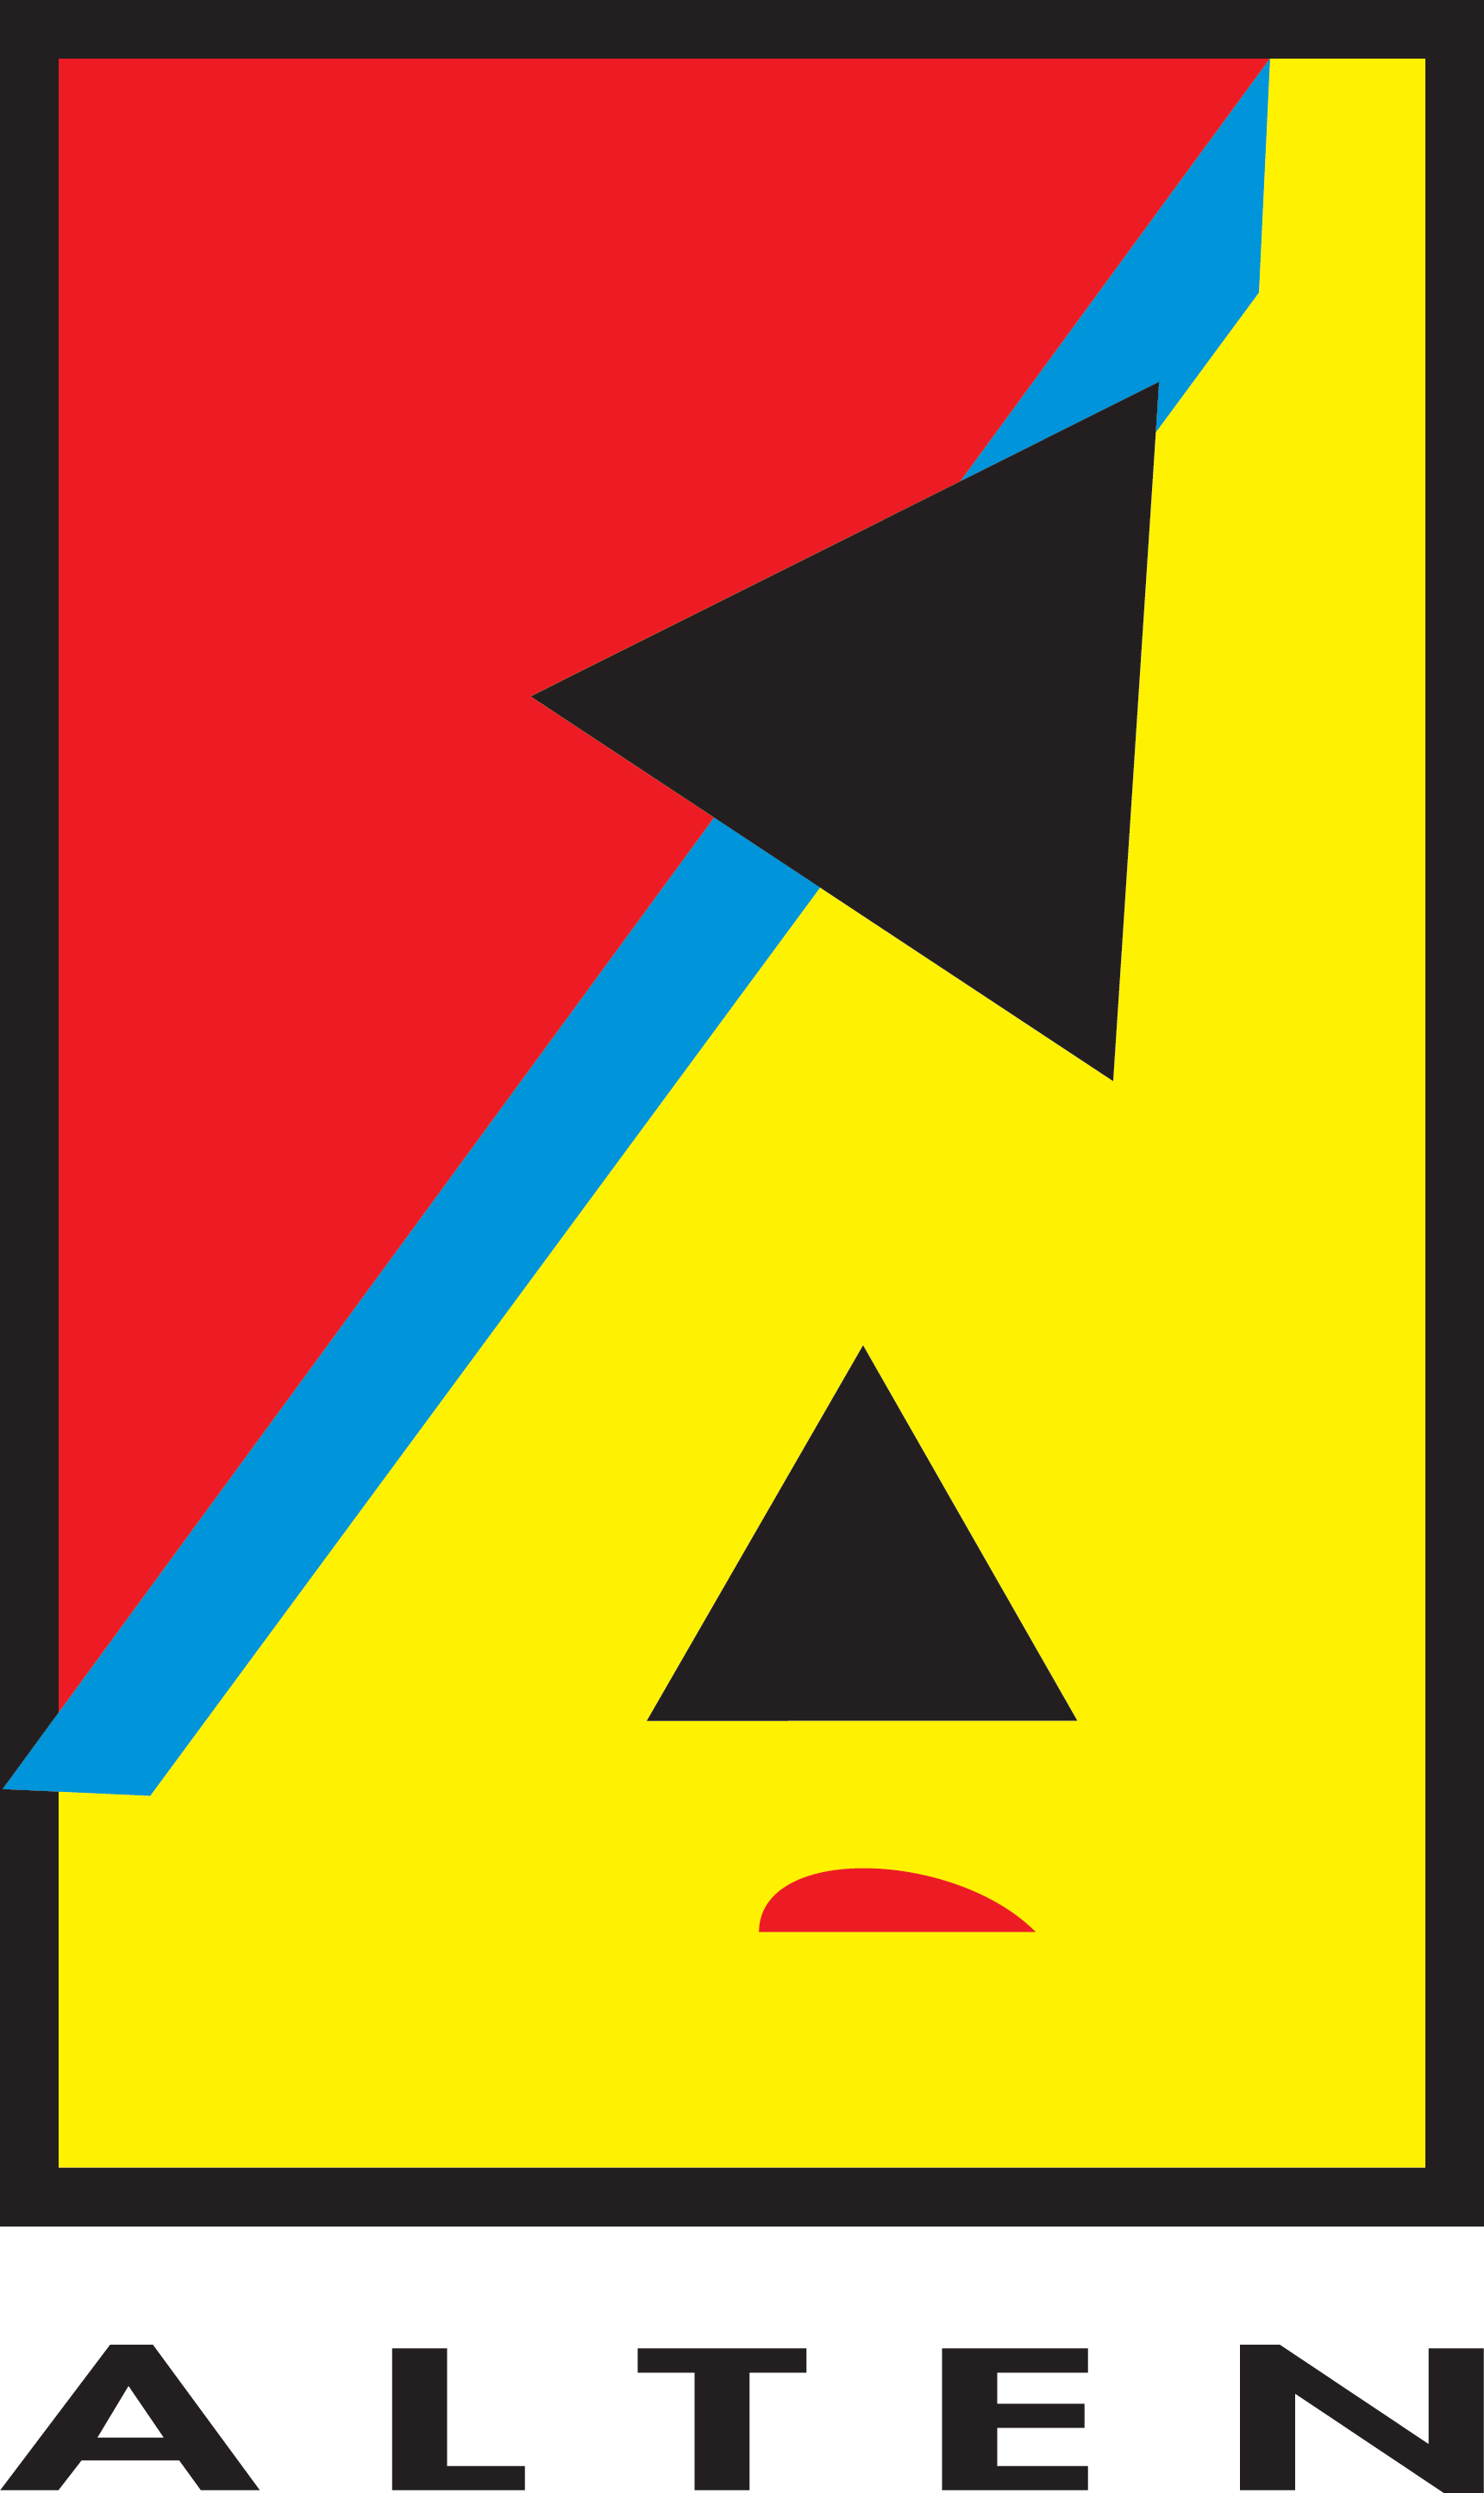 ALTEN Belgium logo